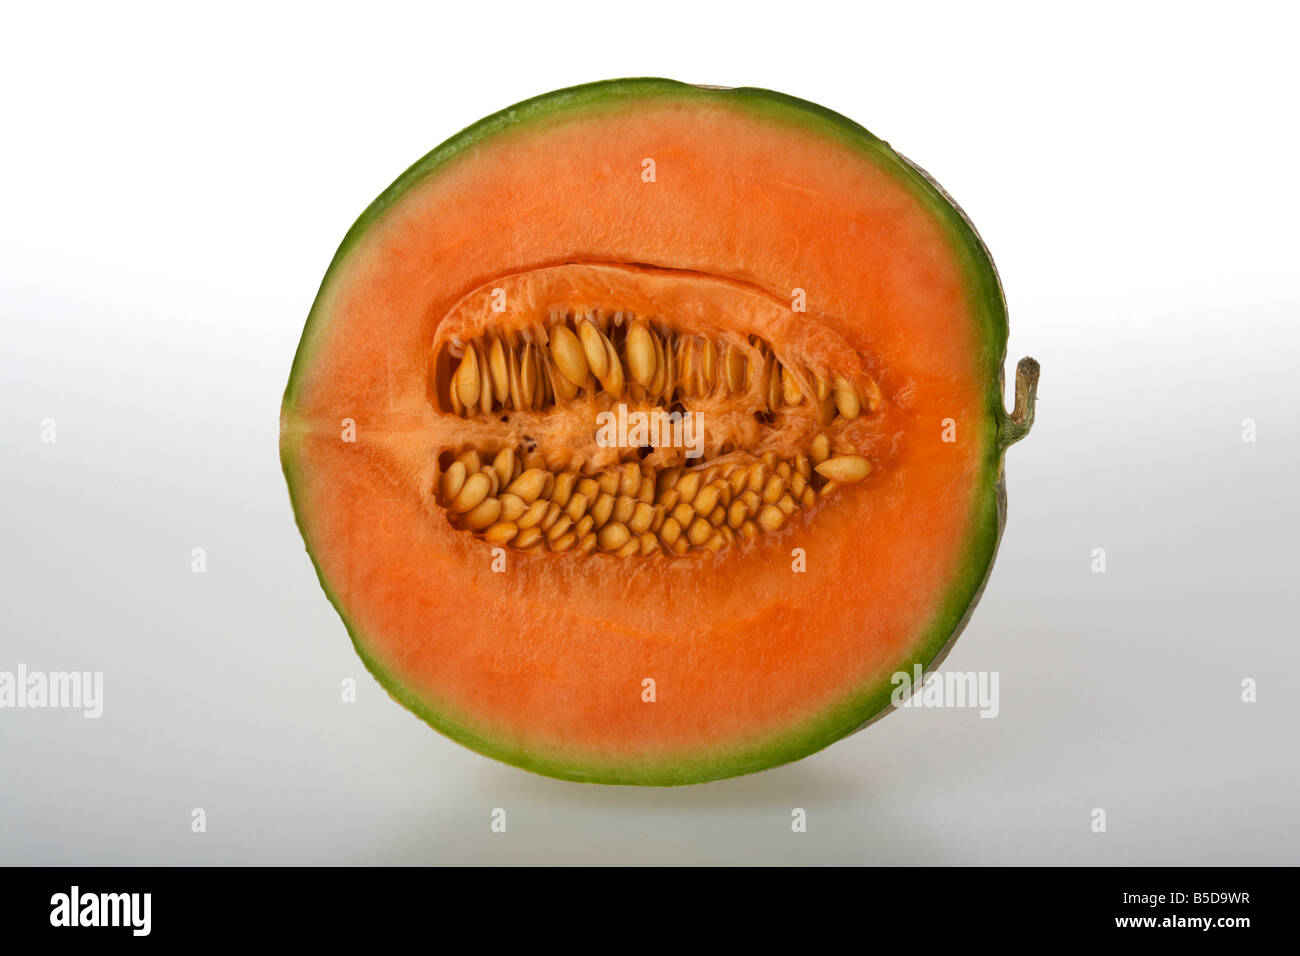 cut half of ripe european cantaloupe melon showing seeds Stock Photo